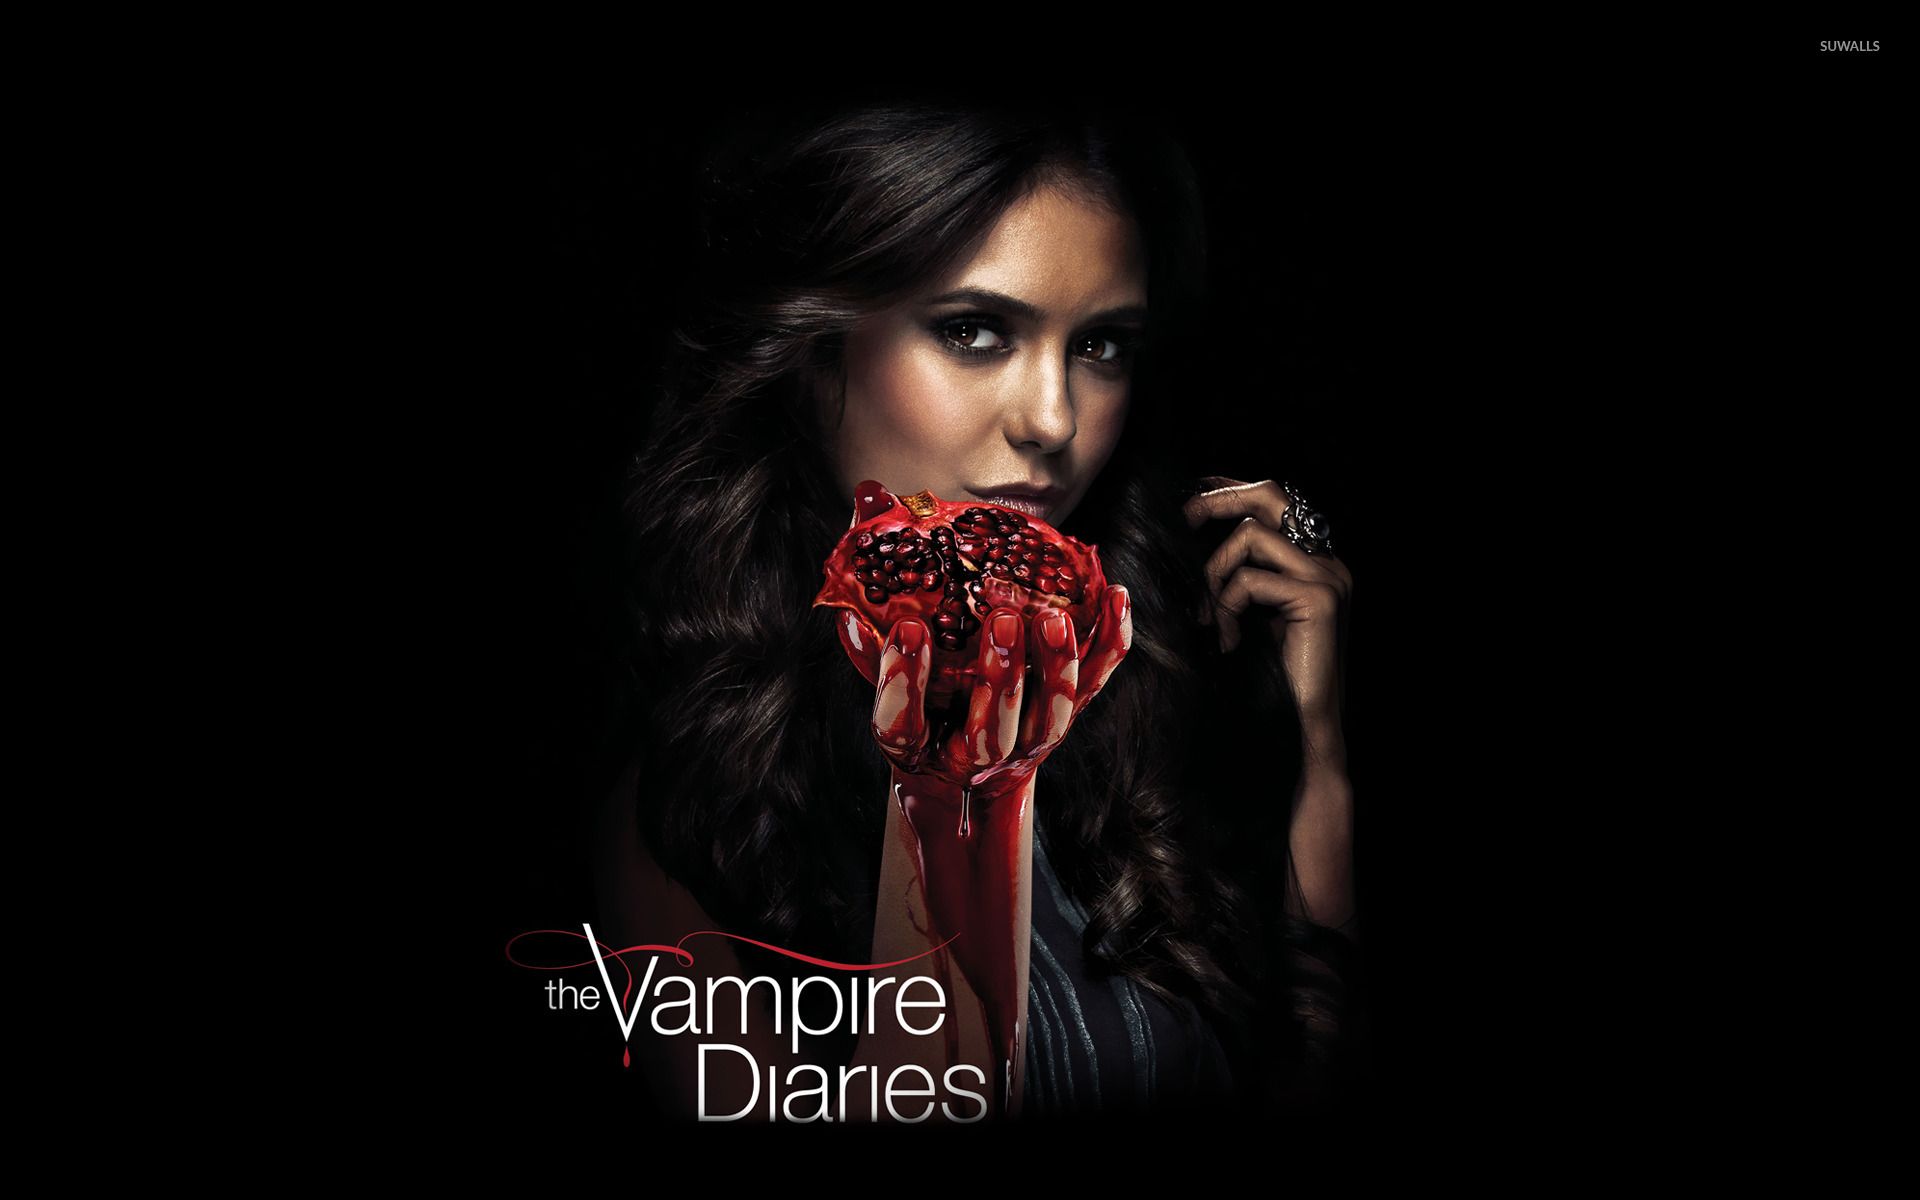 The Vampire Diaries [13] wallpaper Show wallpaper